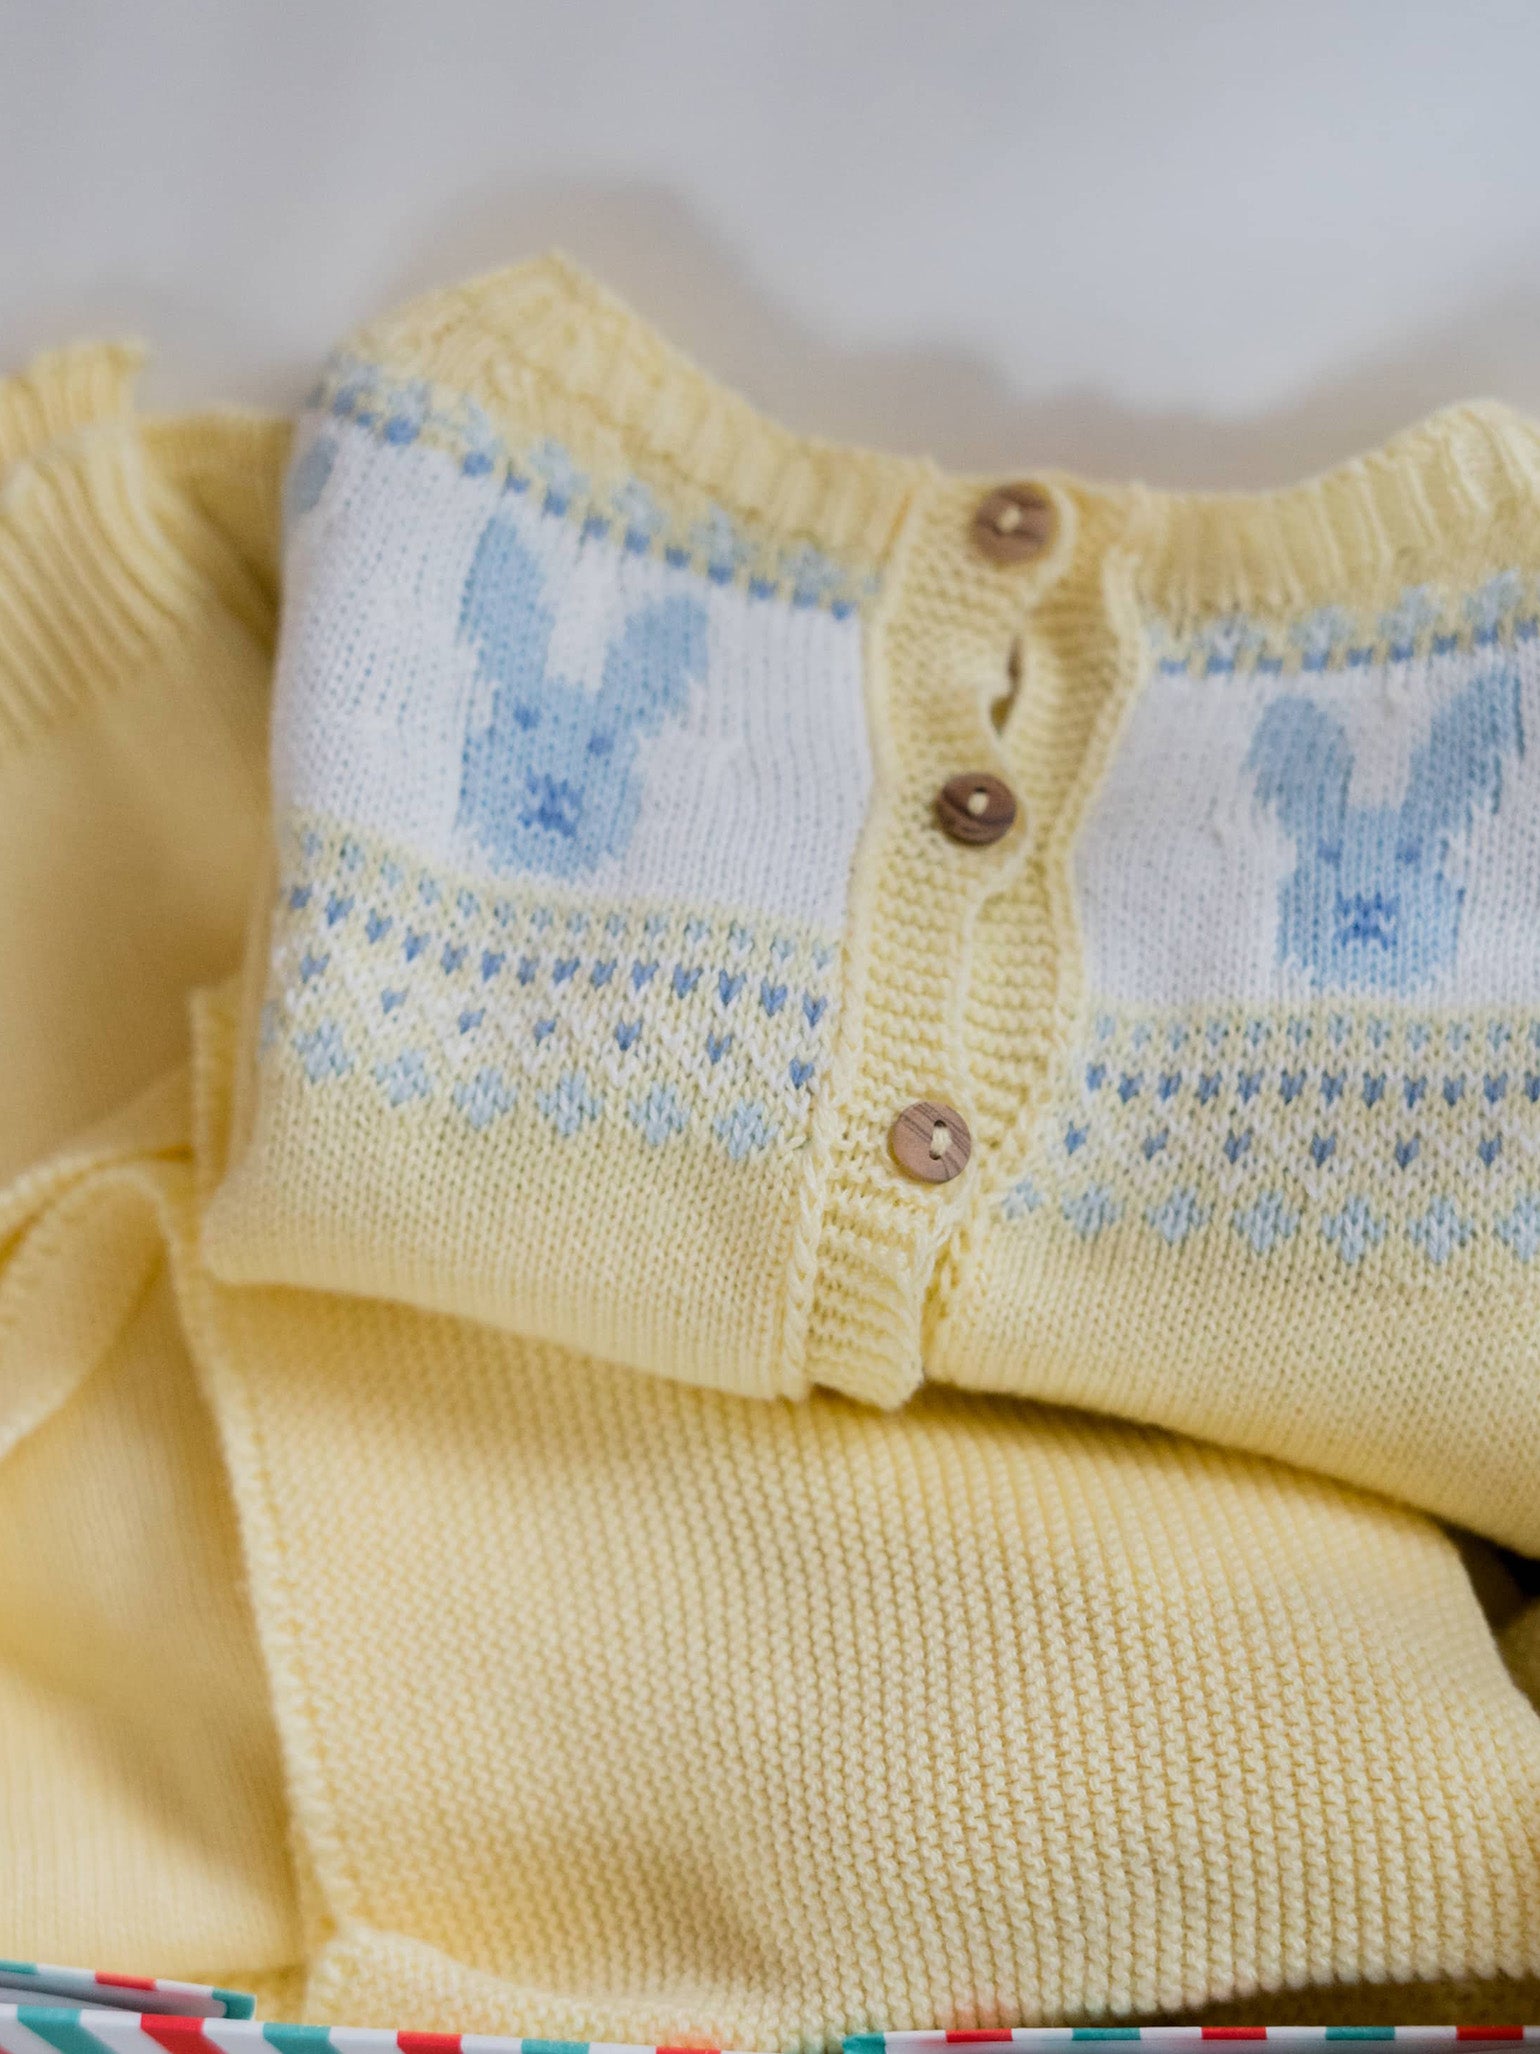 Vanilla Calli Cotton Bunny Baby Knitted Set